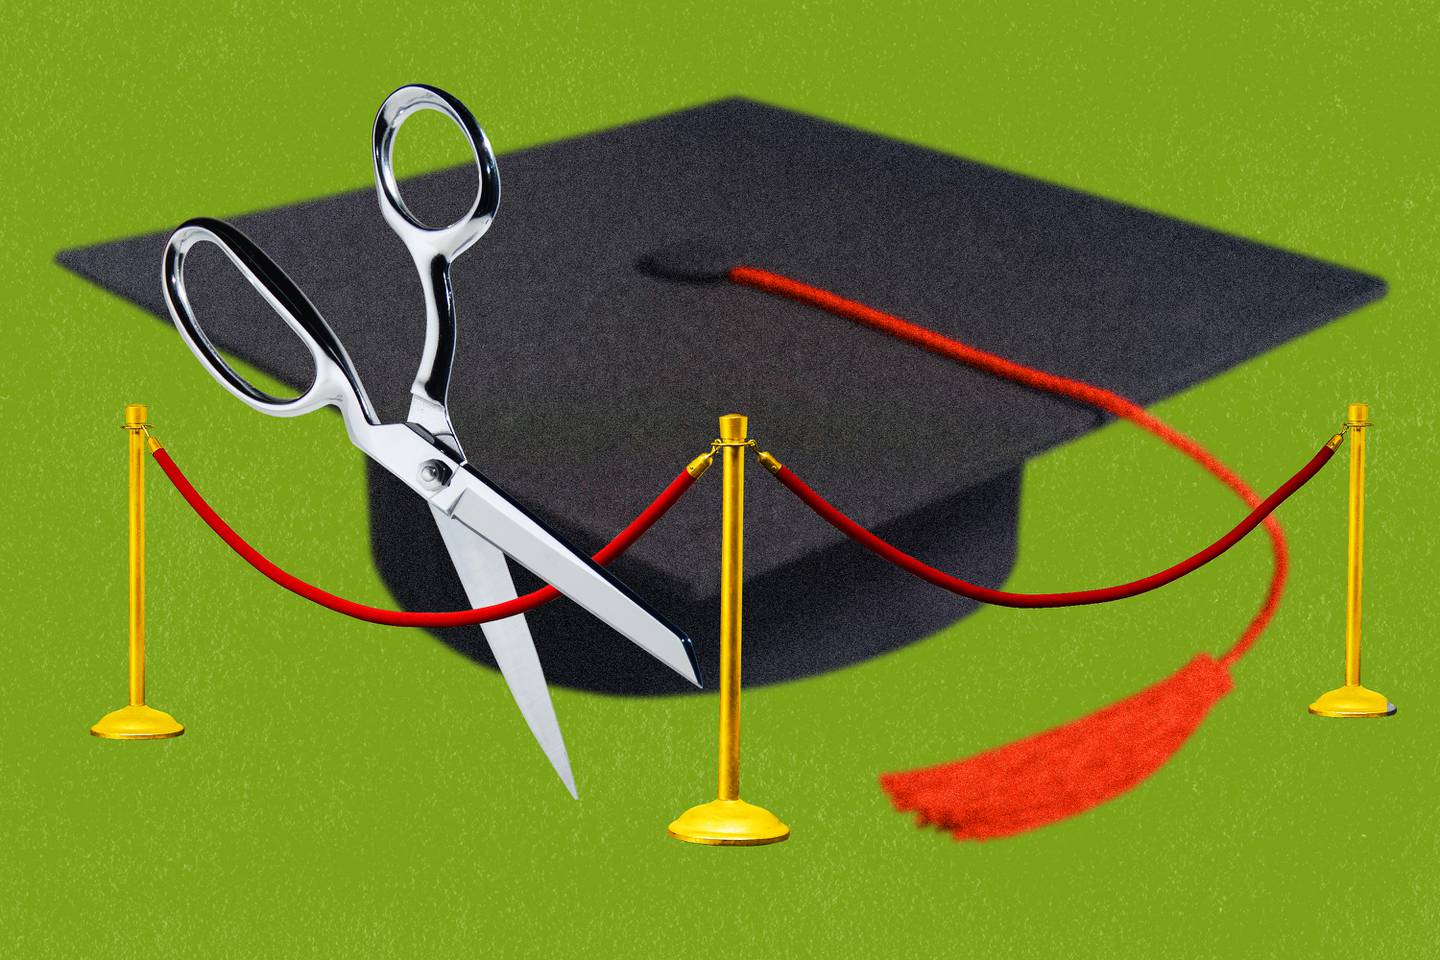 Photo collage of large pair of scissors cutting red velvet rope that blocks off graduation cap.